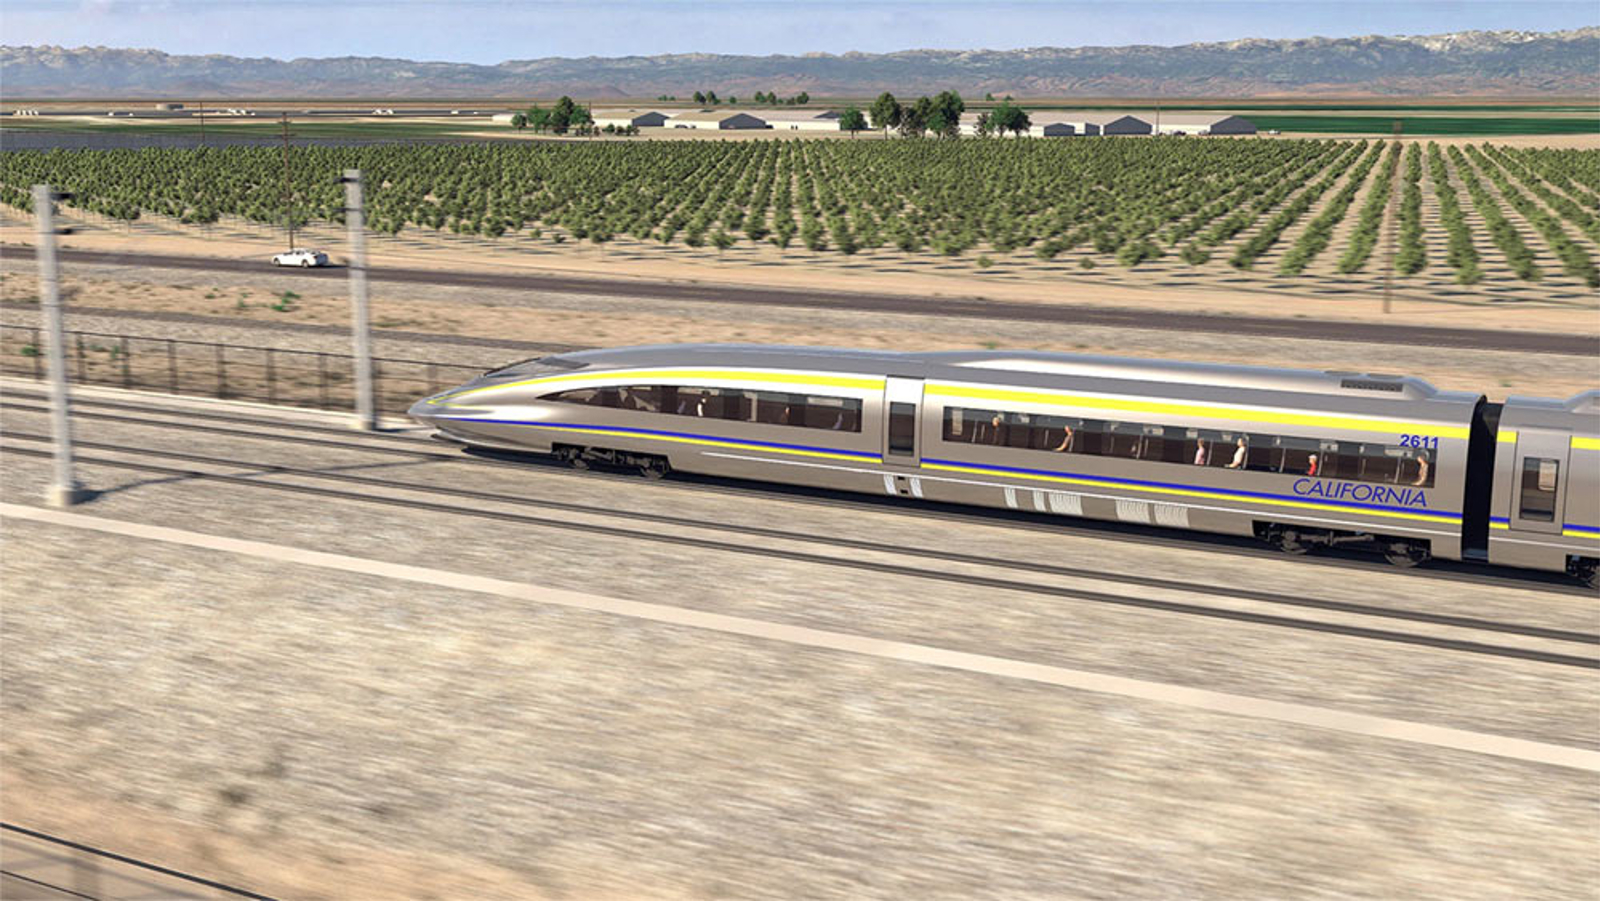 Artist's impression of high speed train in California